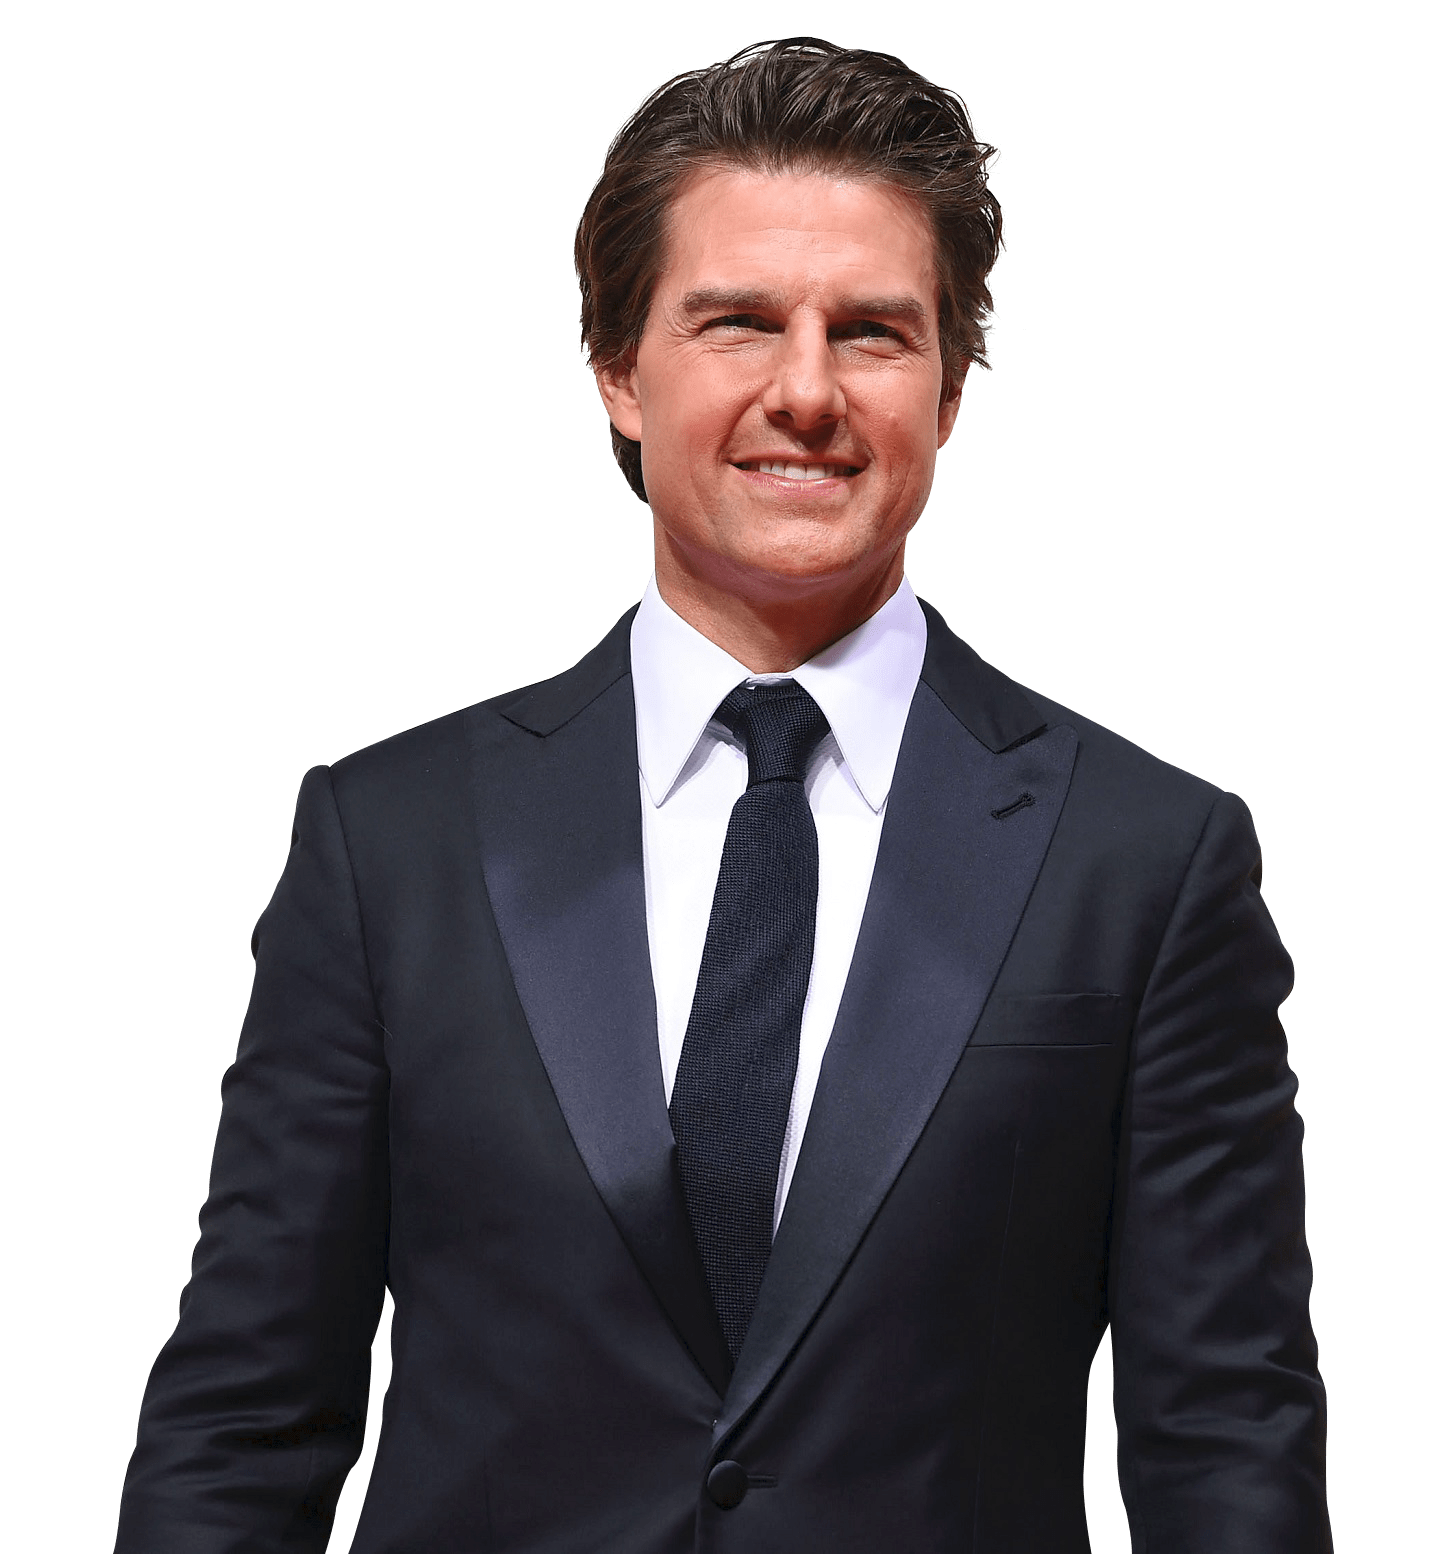 Tom Cruise Suit SVG Clip arts